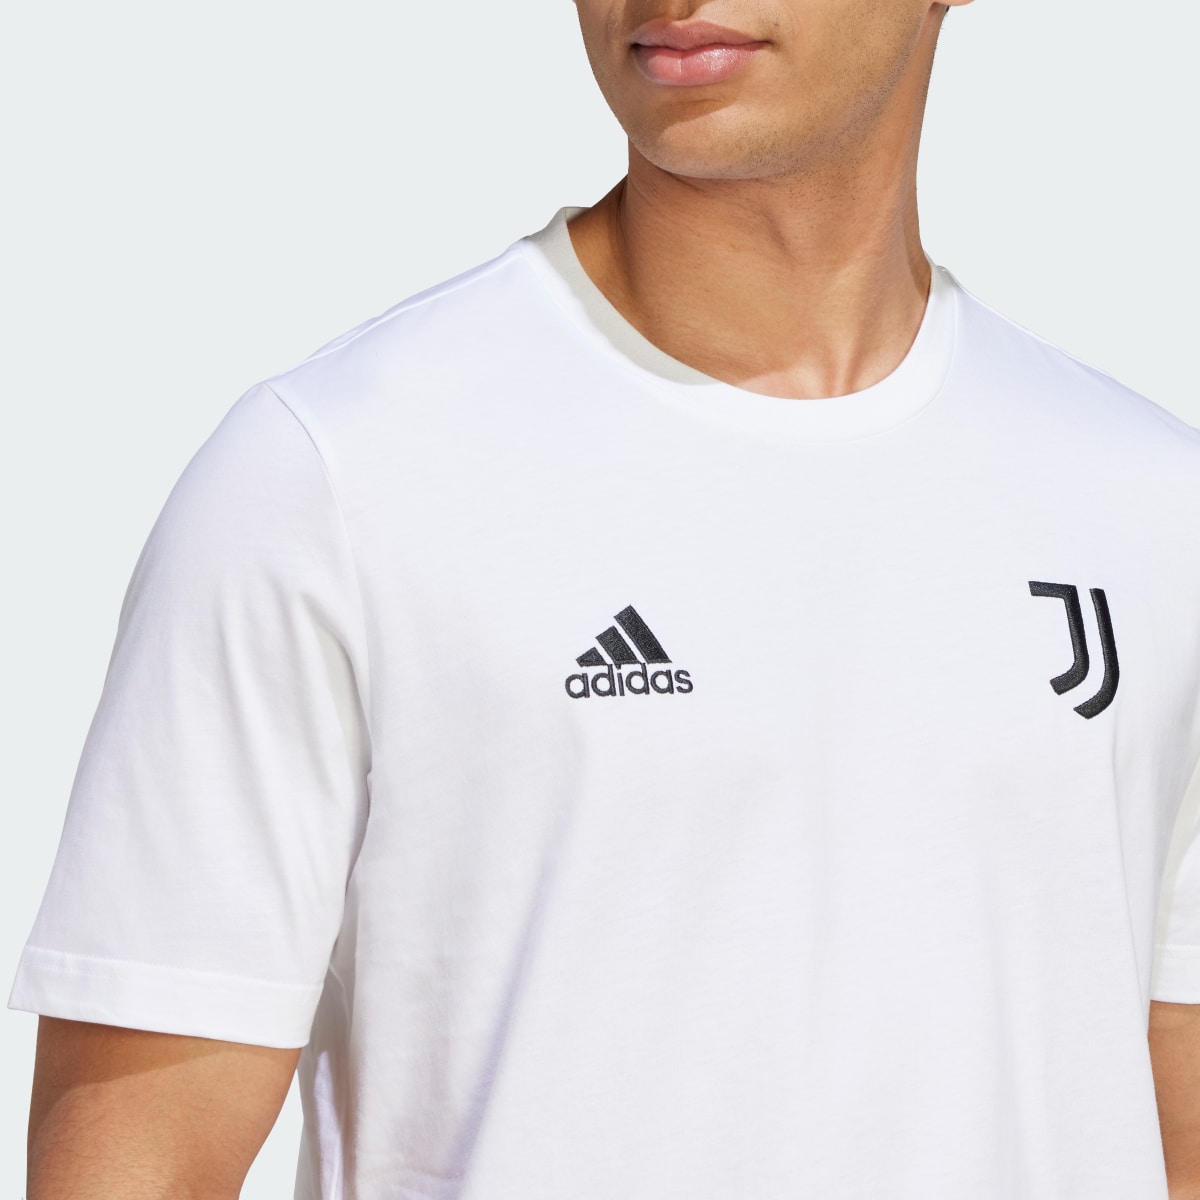 Adidas Juventus DNA T-Shirt. 7